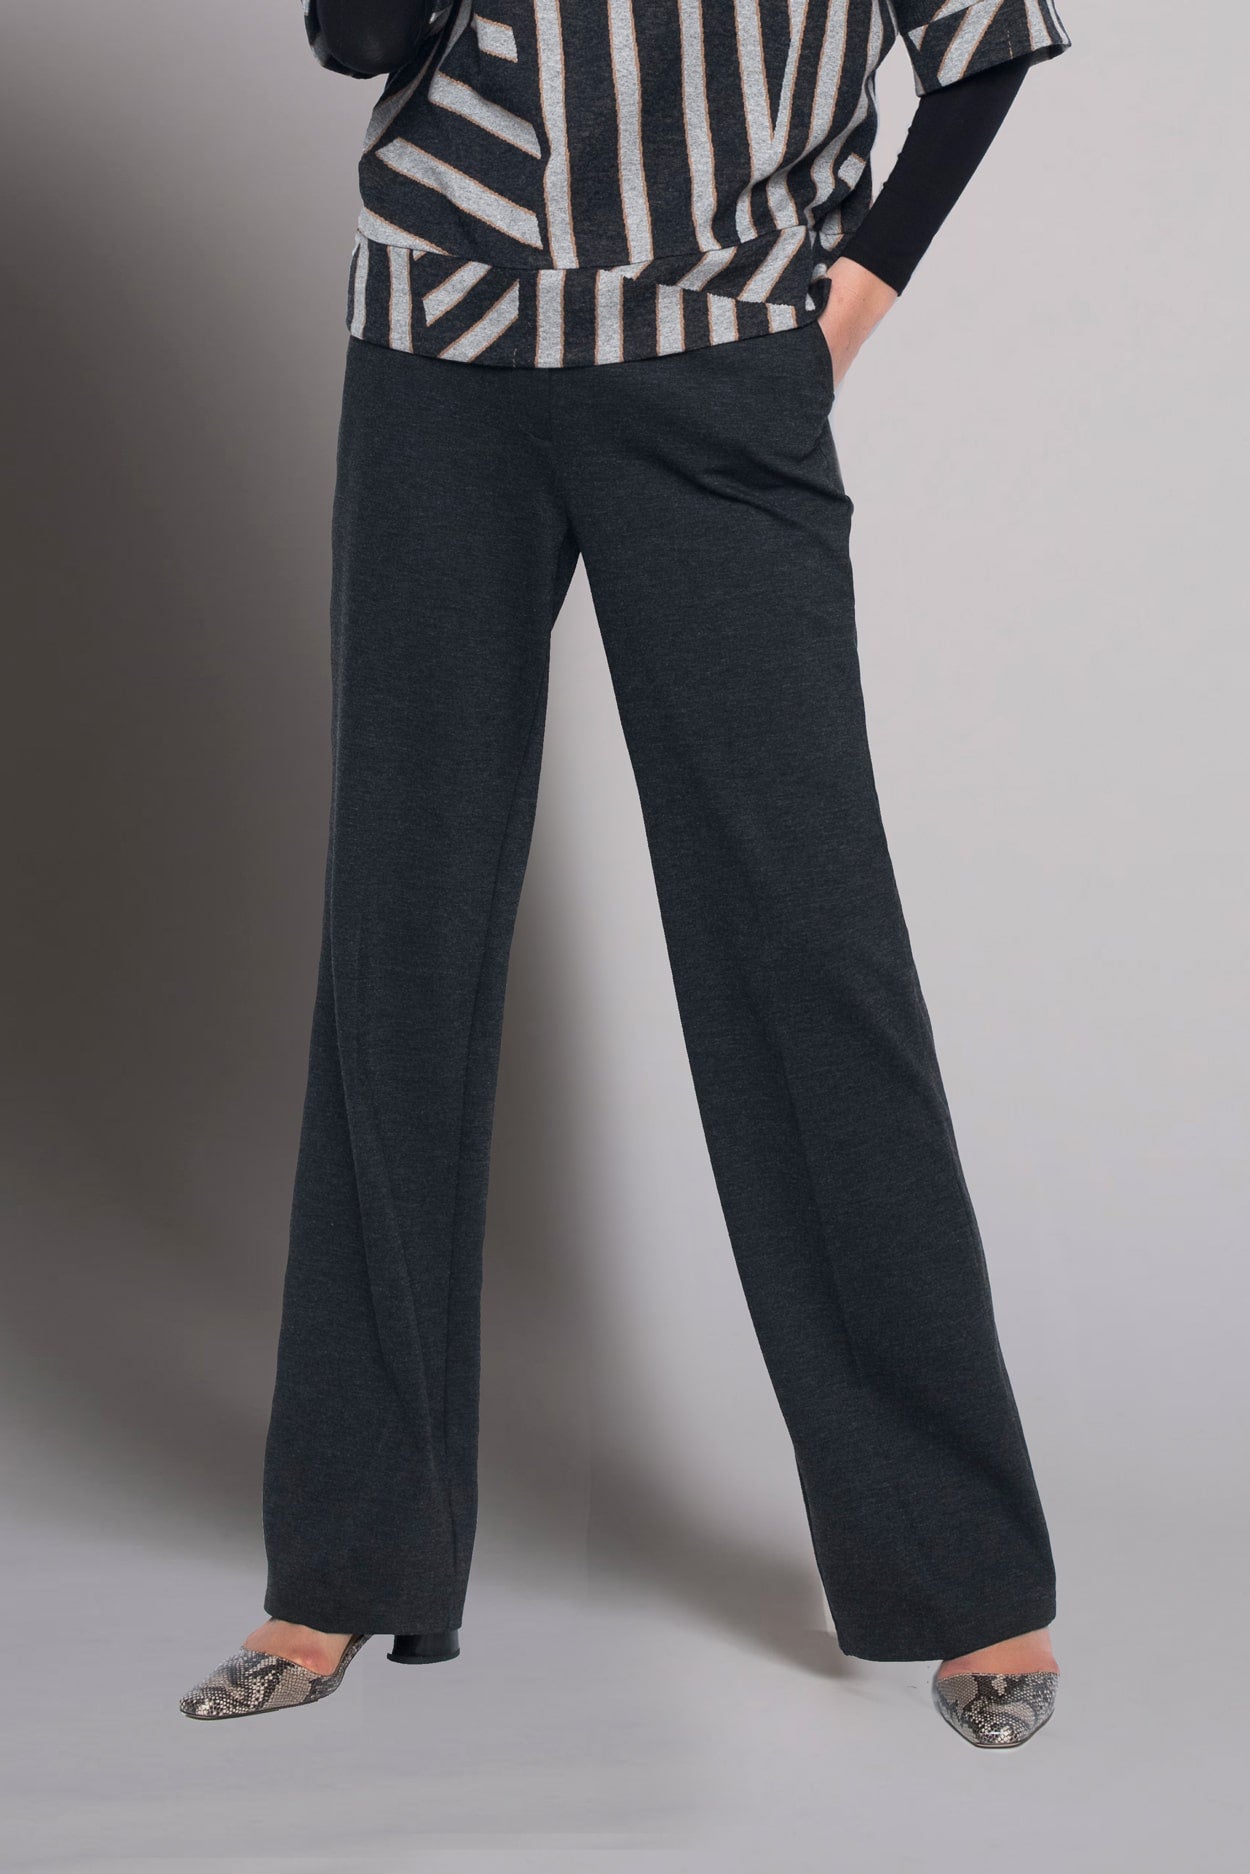 Ex273 Yoga Lace Women Hollow Sports Pants Casual Wide Leg Pants Print Pants  (Dark Gray, XXL) : : Clothing, Shoes & Accessories